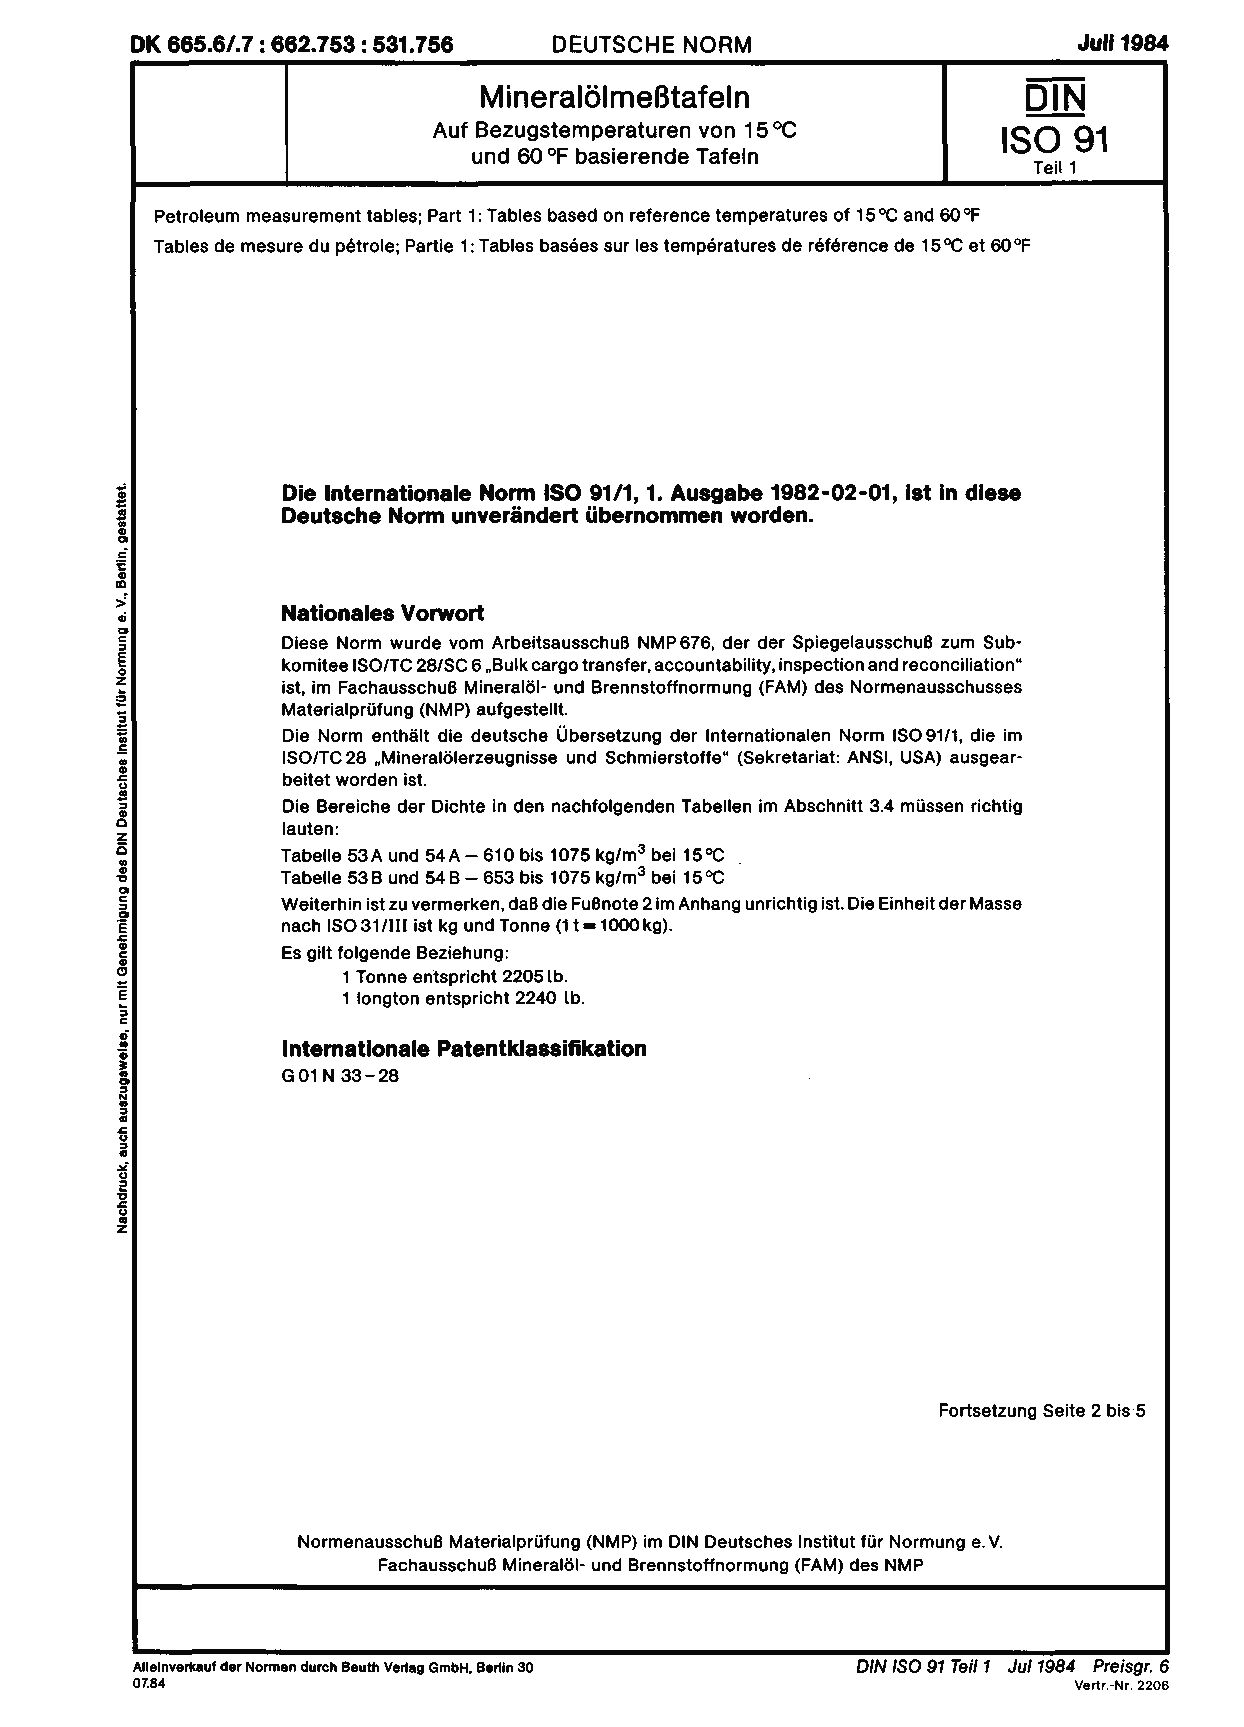 DIN ISO 91-1:1984